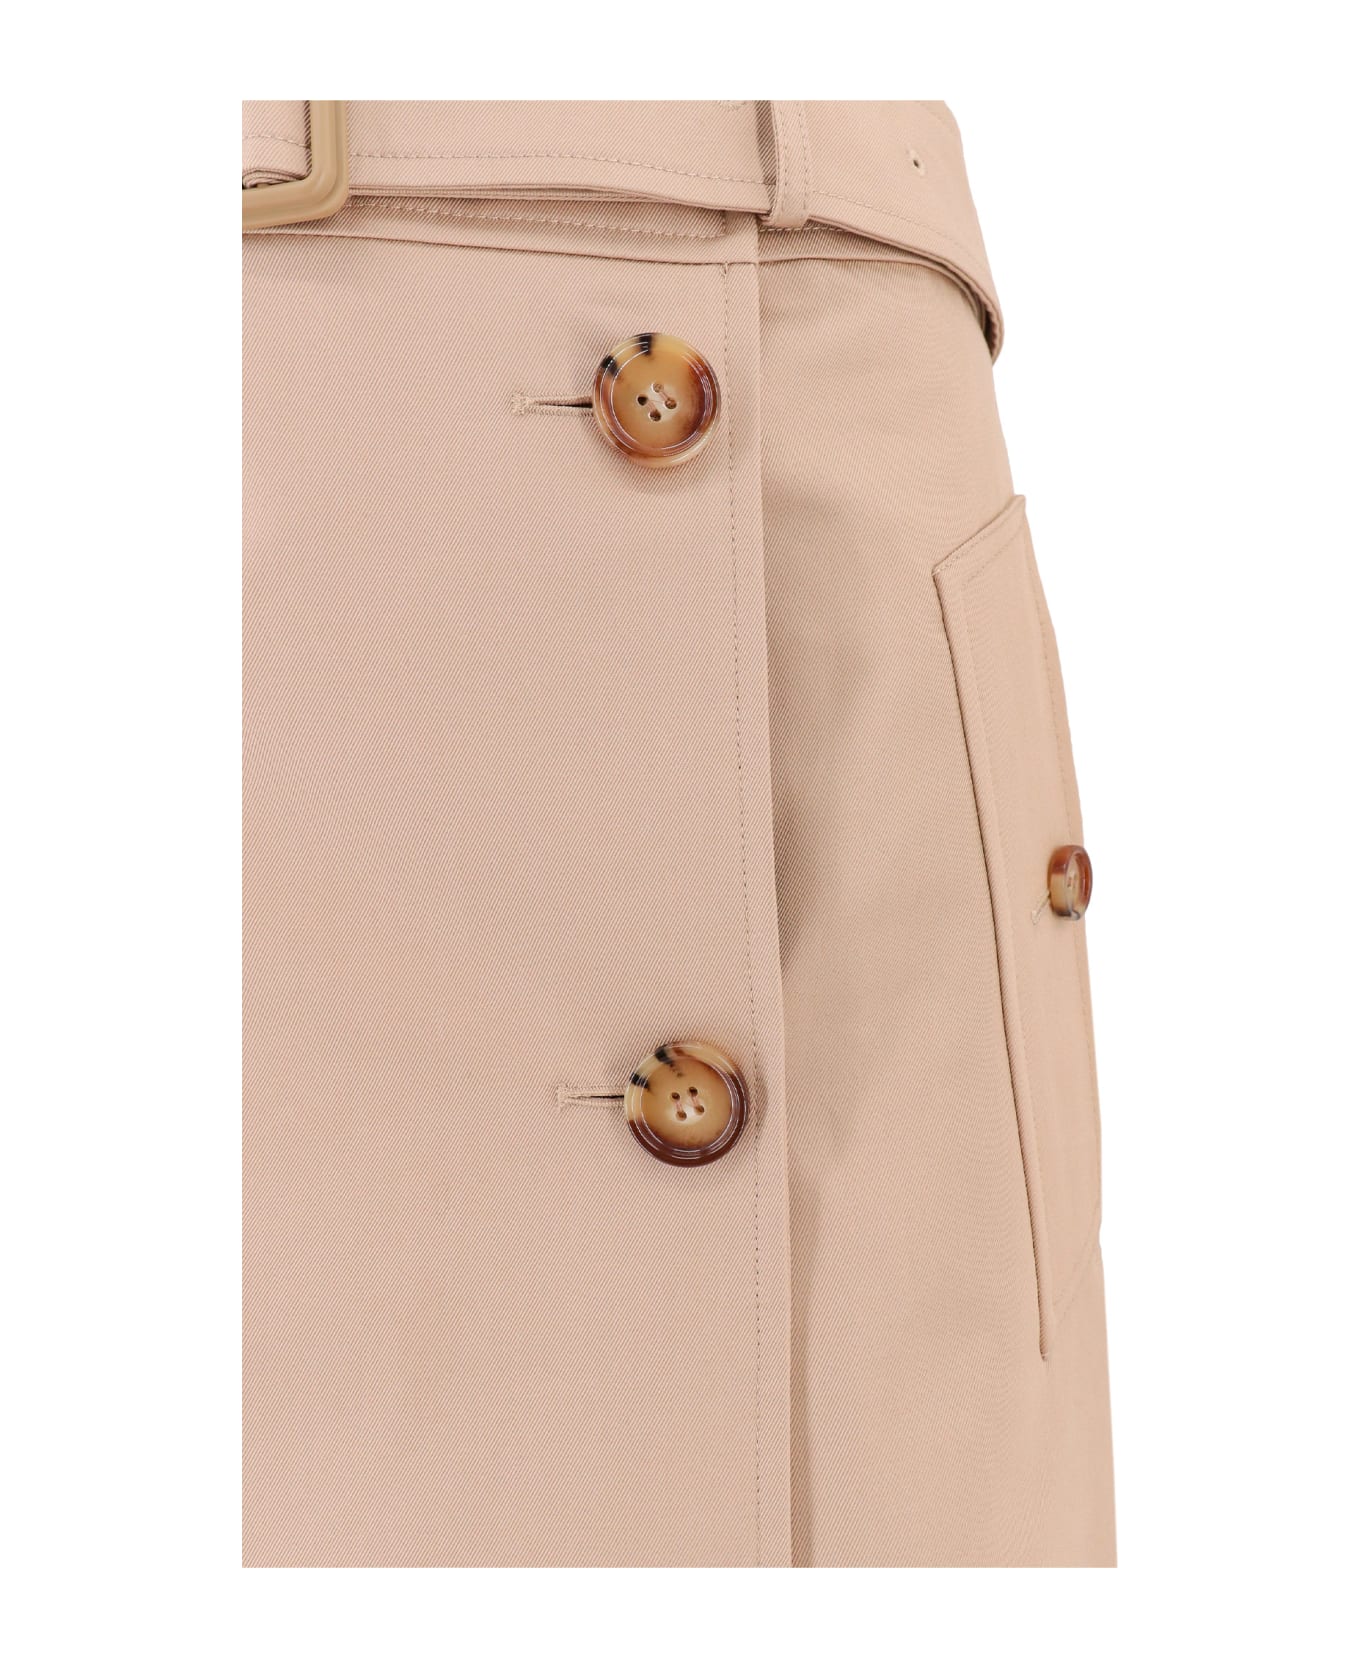 Burberry Skirt - Beige